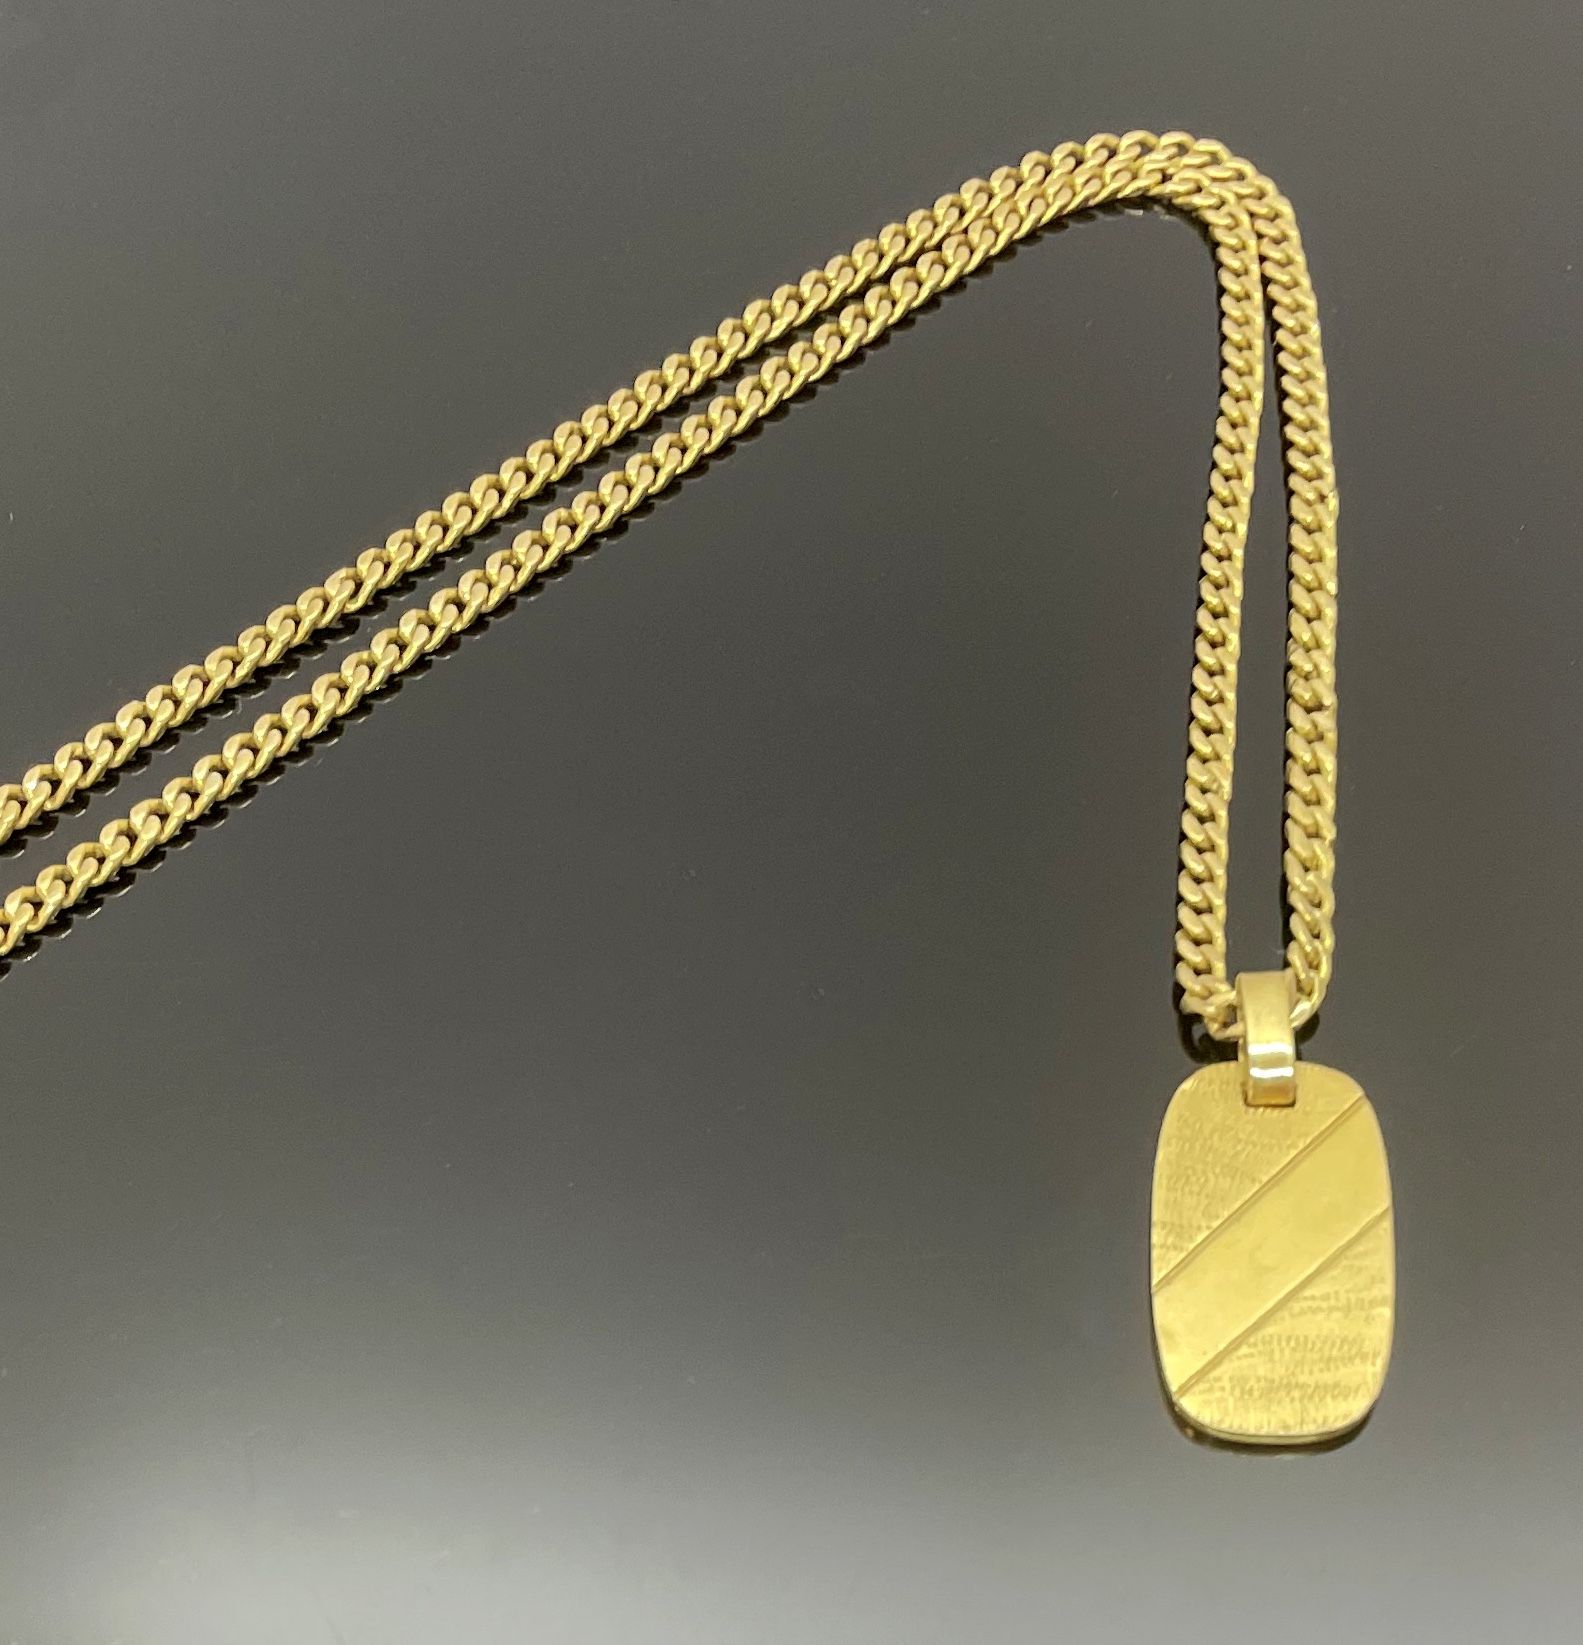 Null 750密尔的黄金重链，手持黄金板作为吊坠。重量23.83克